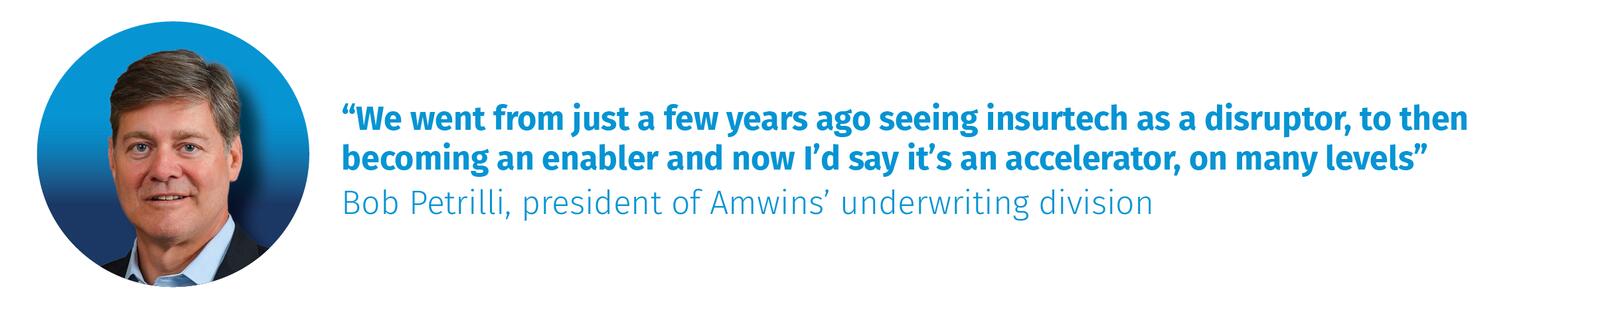 Bob Petrilli, president of Amwins’ underwriting division